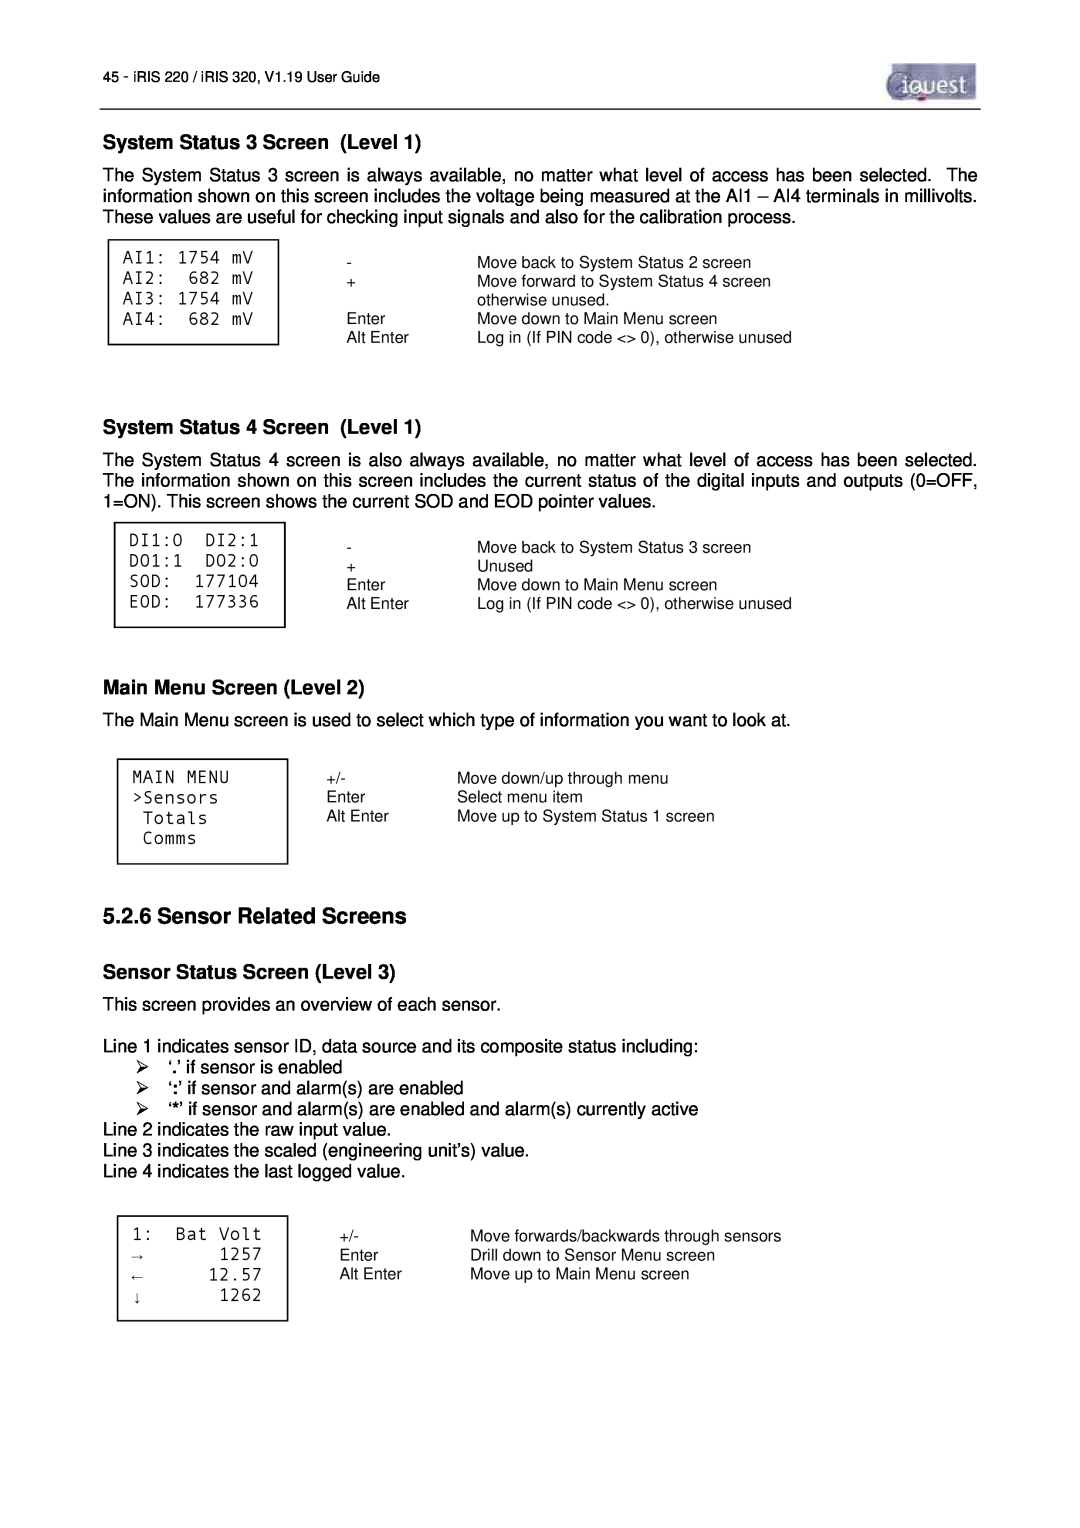 Optiquest iRIS 220, iRIS 320 manual Sensor Related Screens, System Status 3 Screen Level, System Status 4 Screen Level 